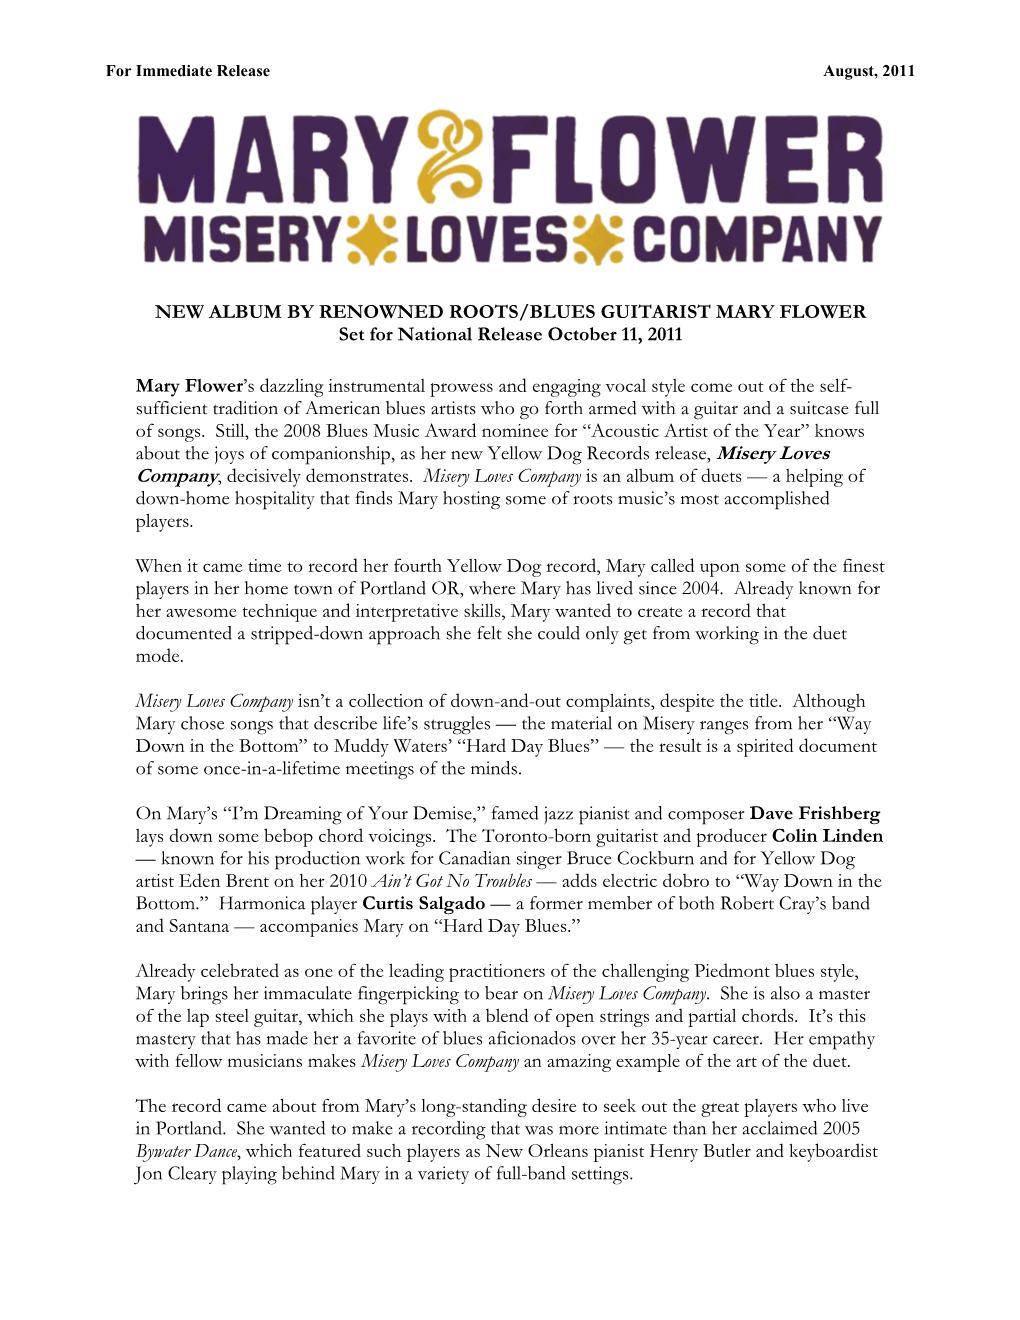 MARY FLOWER Set for National Release October 11, 2011